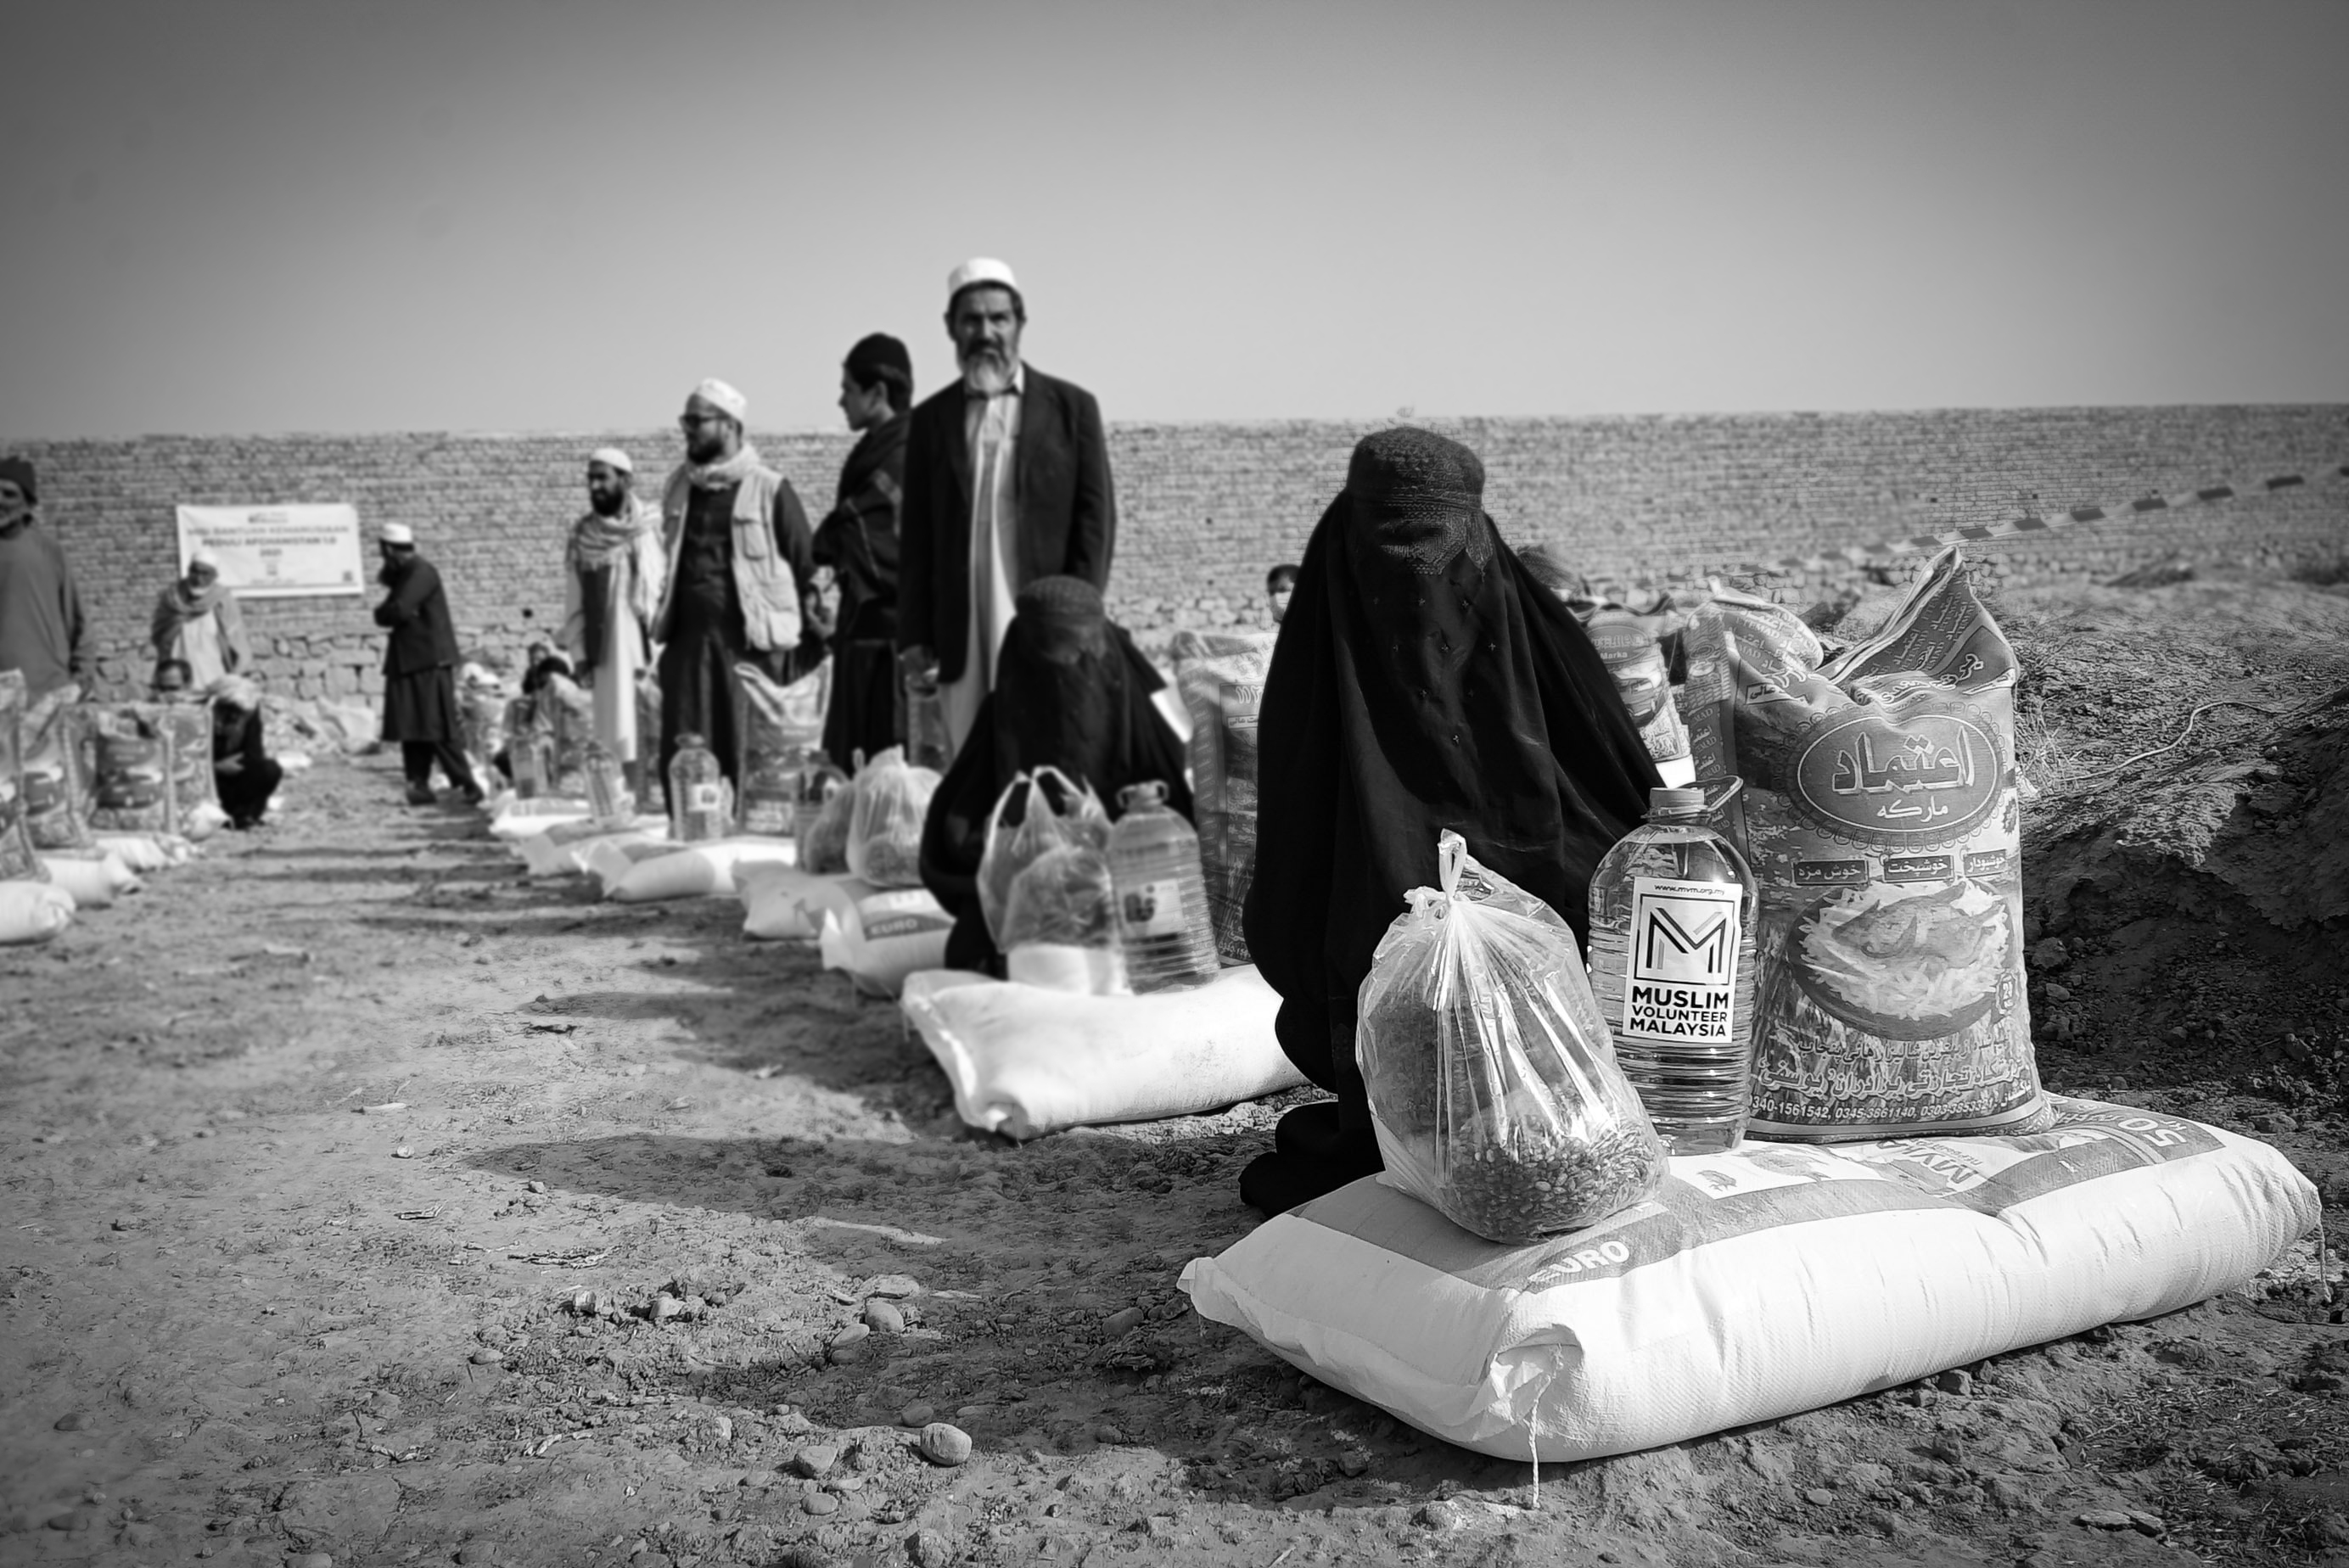 Women providing humanitarian aid in Afghanistan